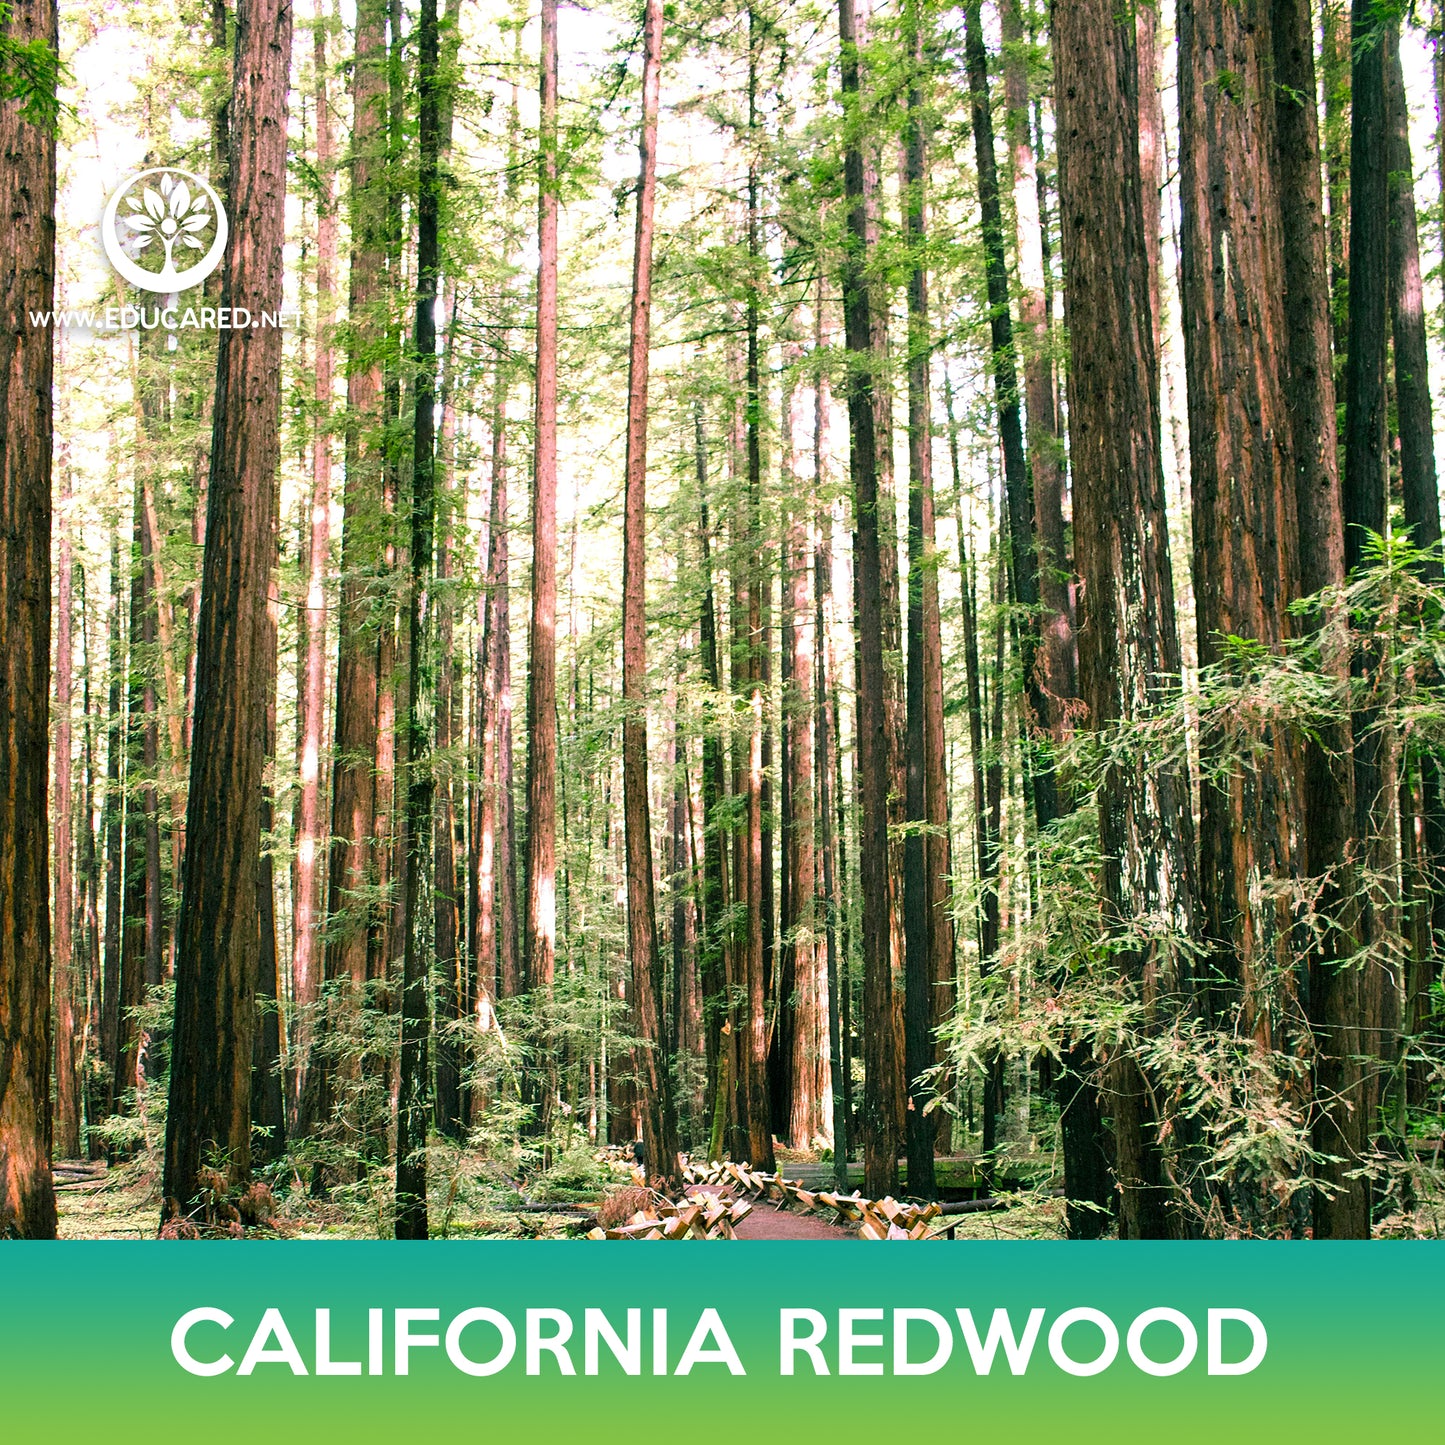 California Redwood Seeds, Coastal Sequoia, Coast Redwood, Sequoia sempervirens